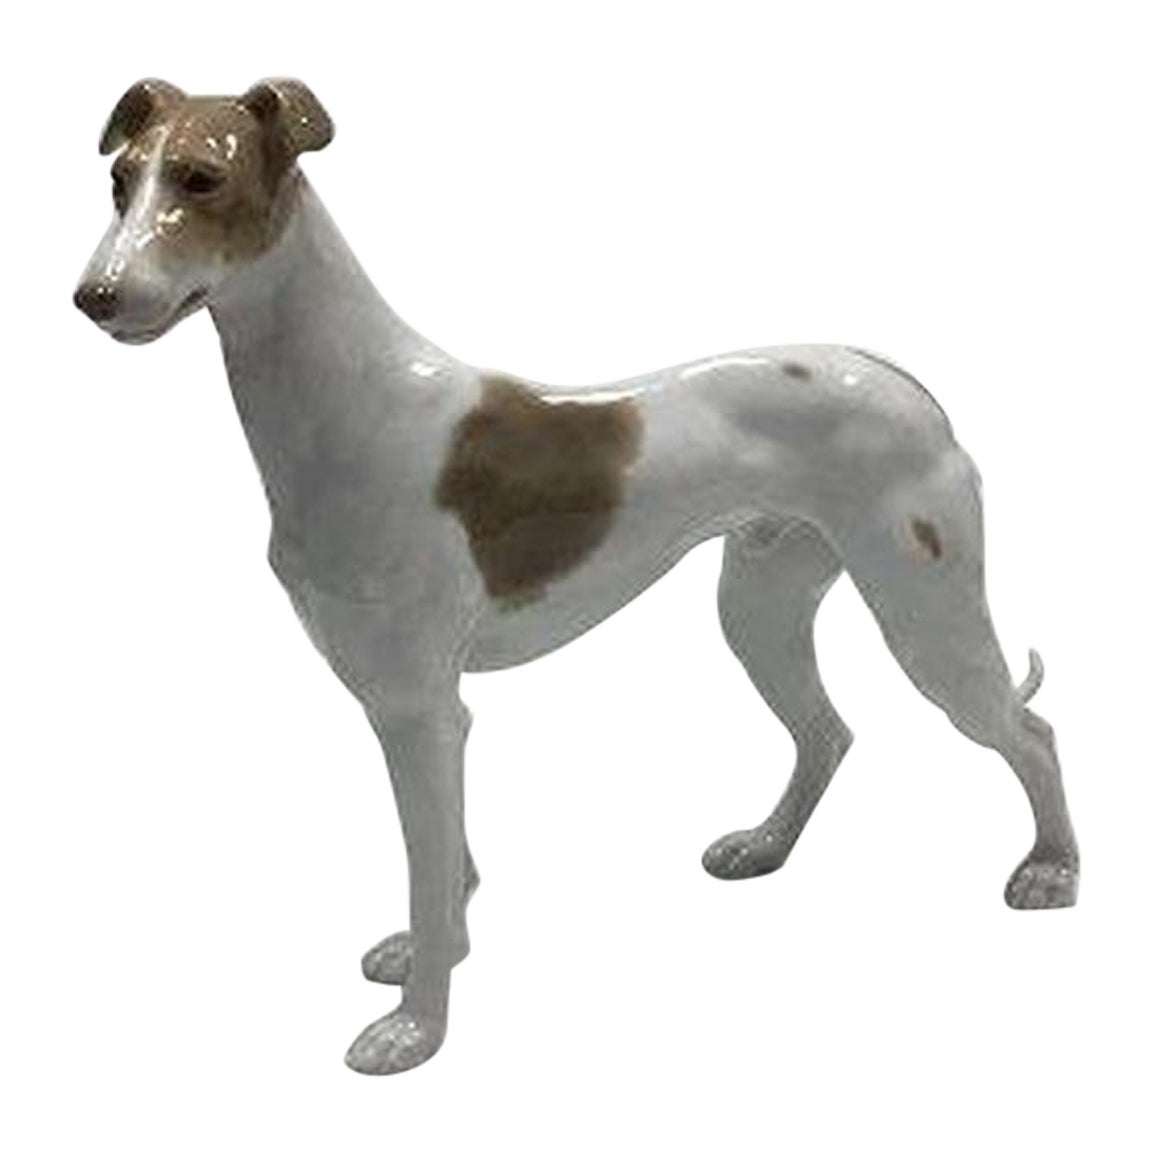 Bing & Grondahl Figurine of Greyhound No 2076